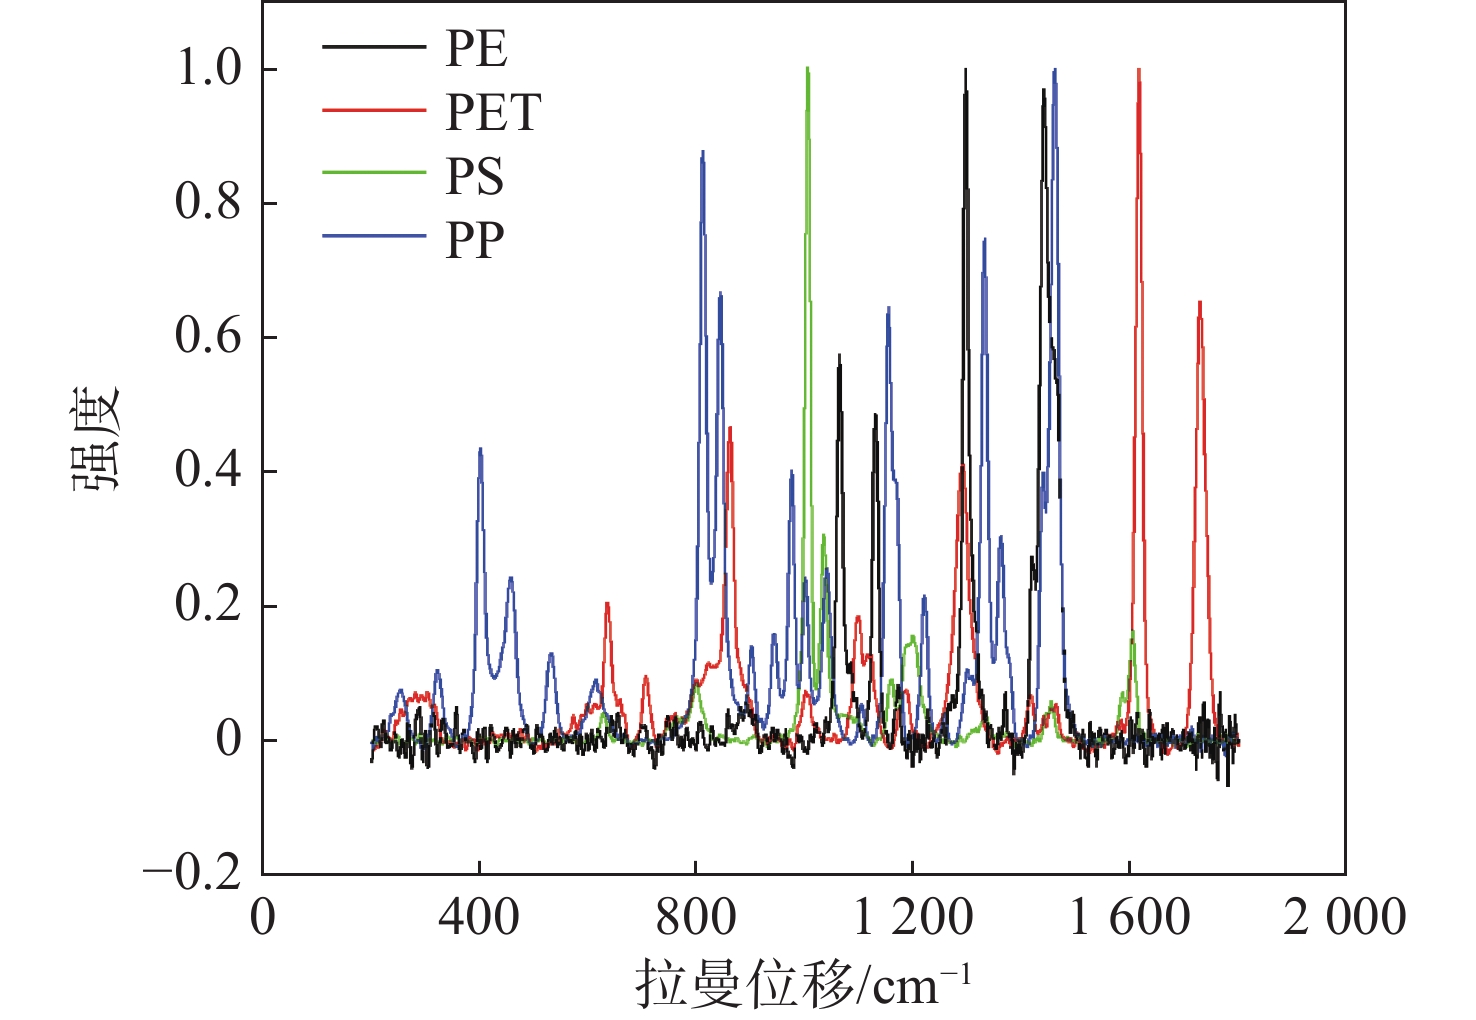 Average Raman spectra of four types of plastics